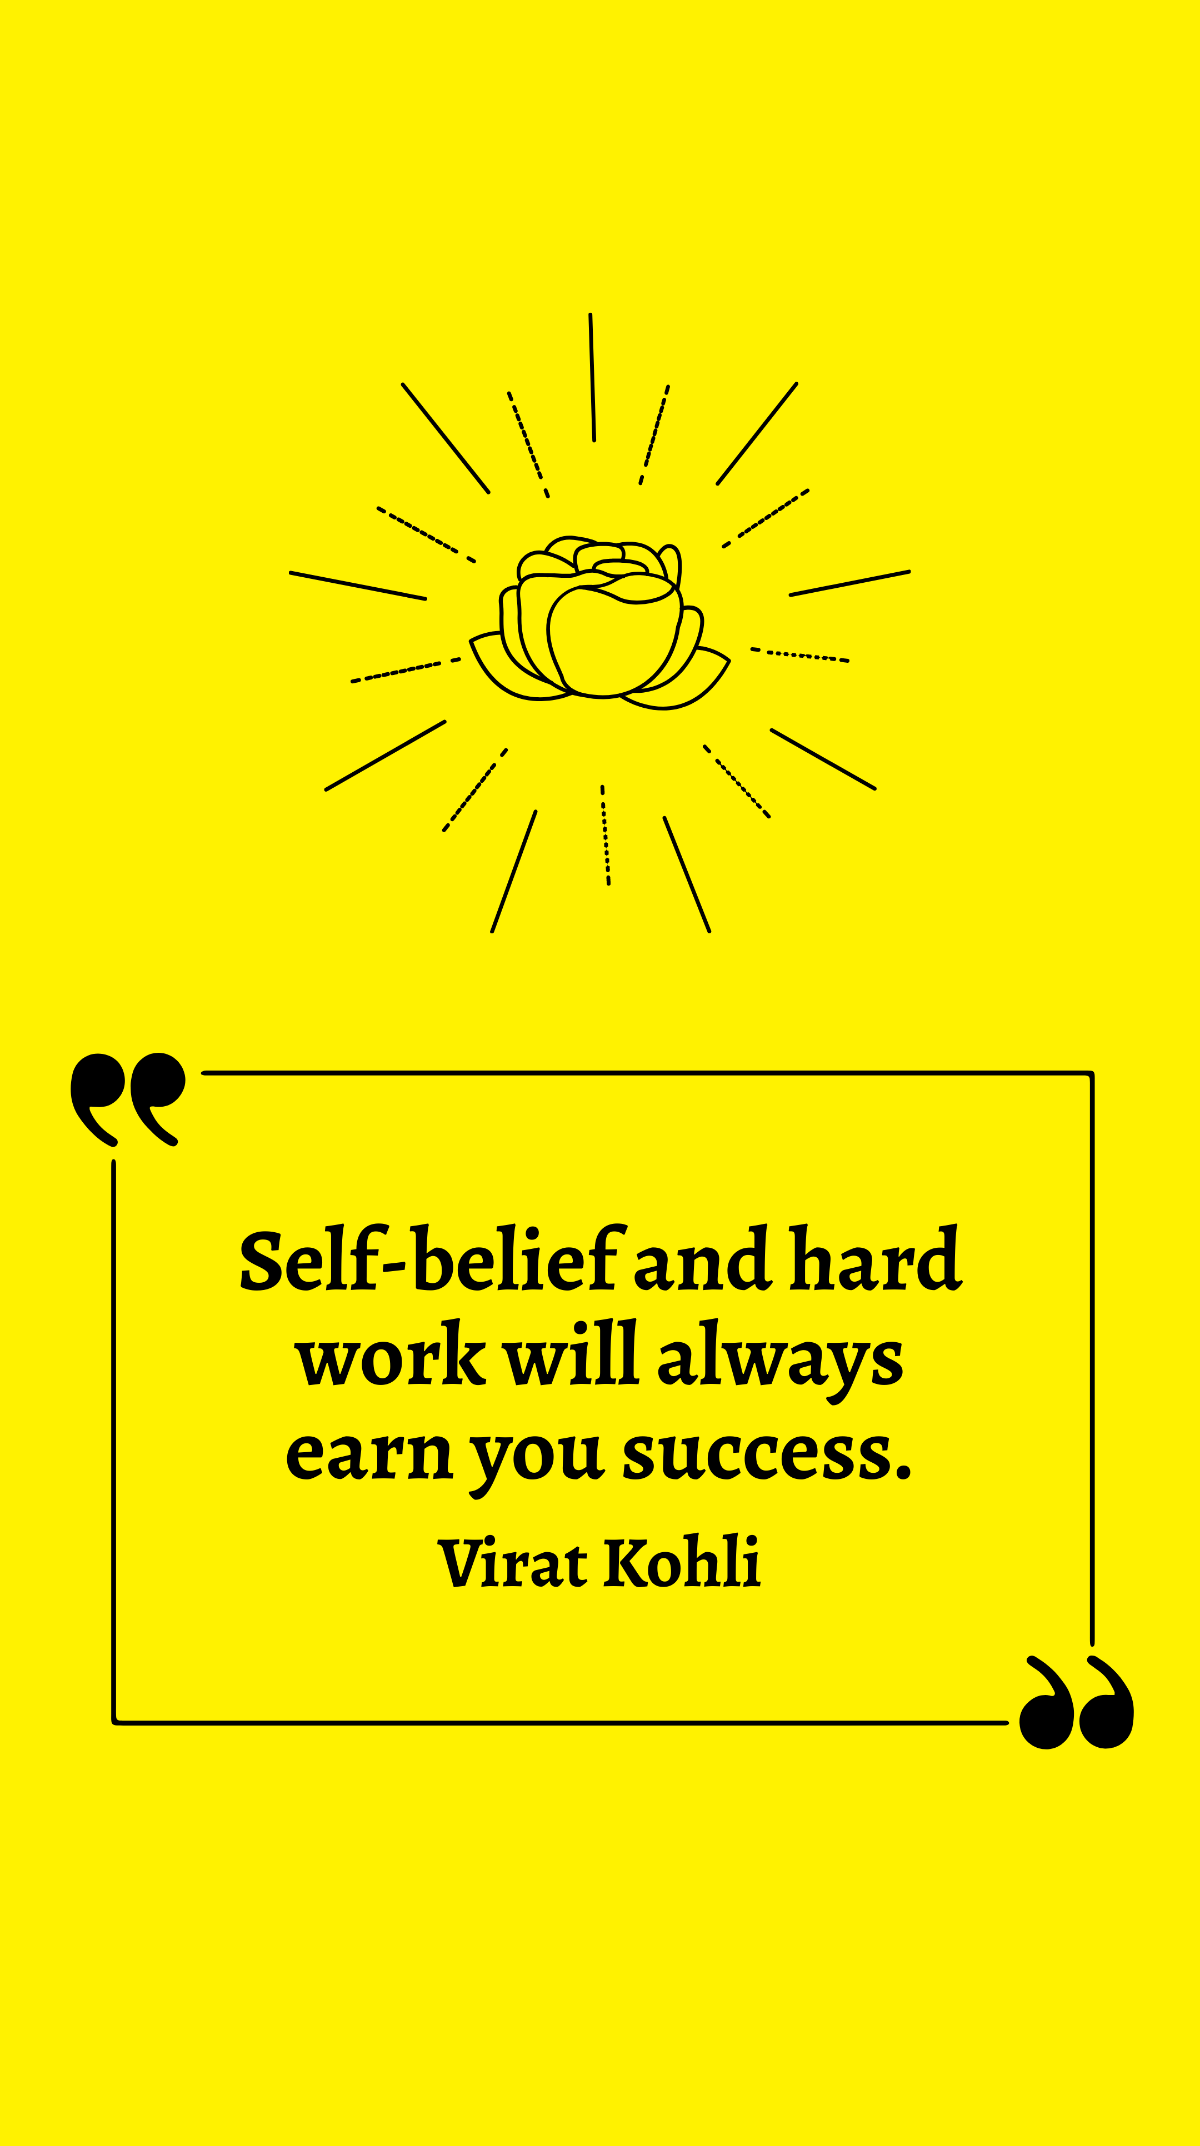 Free Virat Kohli - Self-belief and hard work will always earn you success. Template